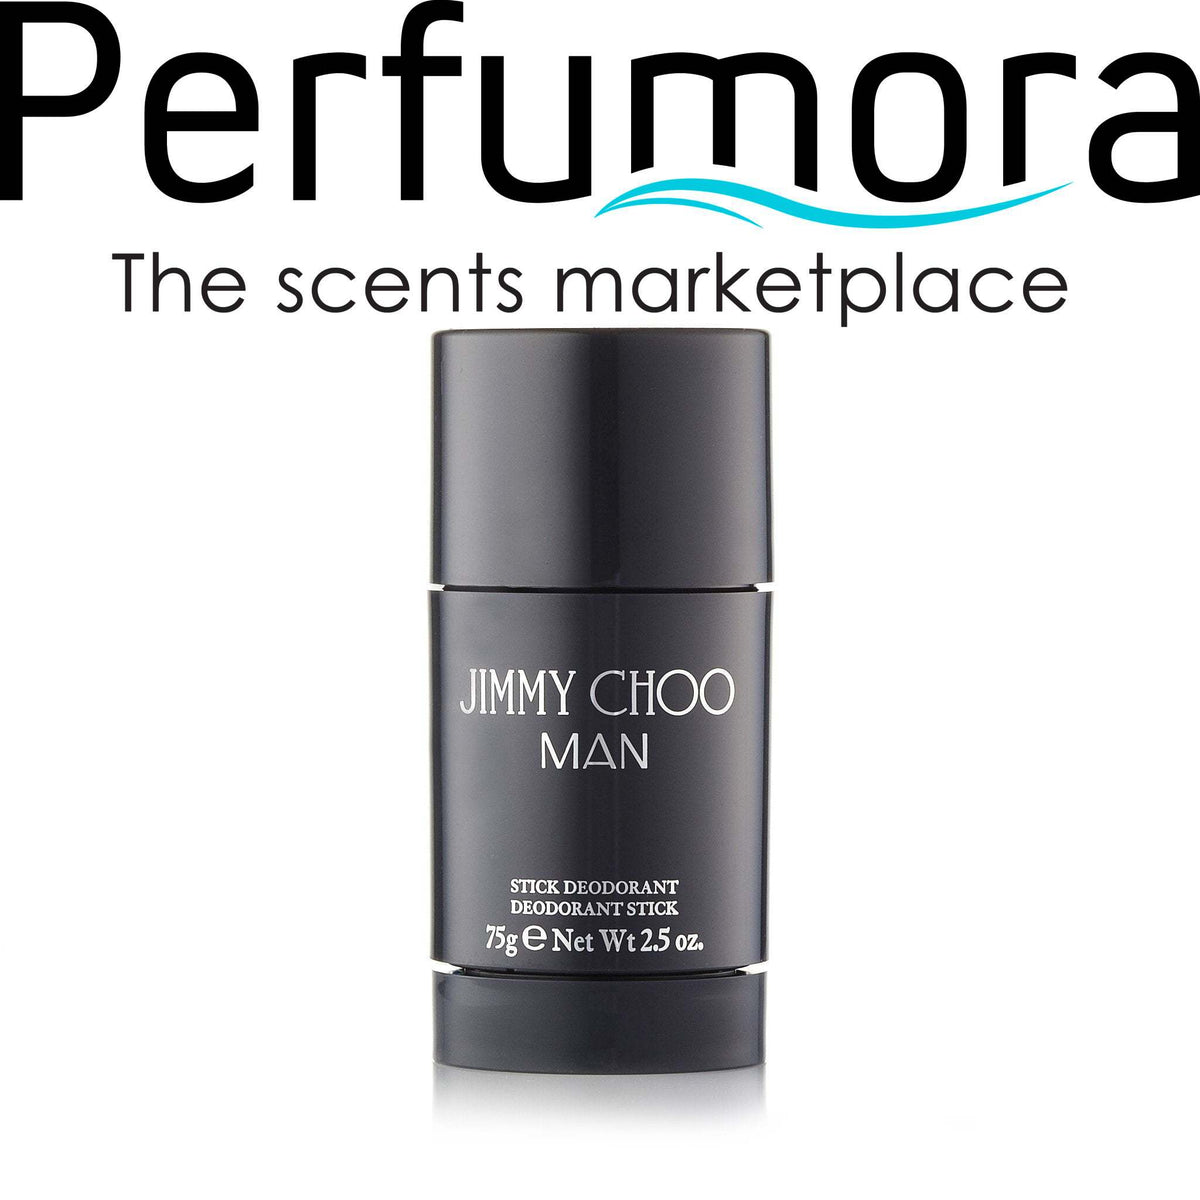 Jimmy Choo Man Deodorant for Men by Jimmy Choo 2.5 oz.